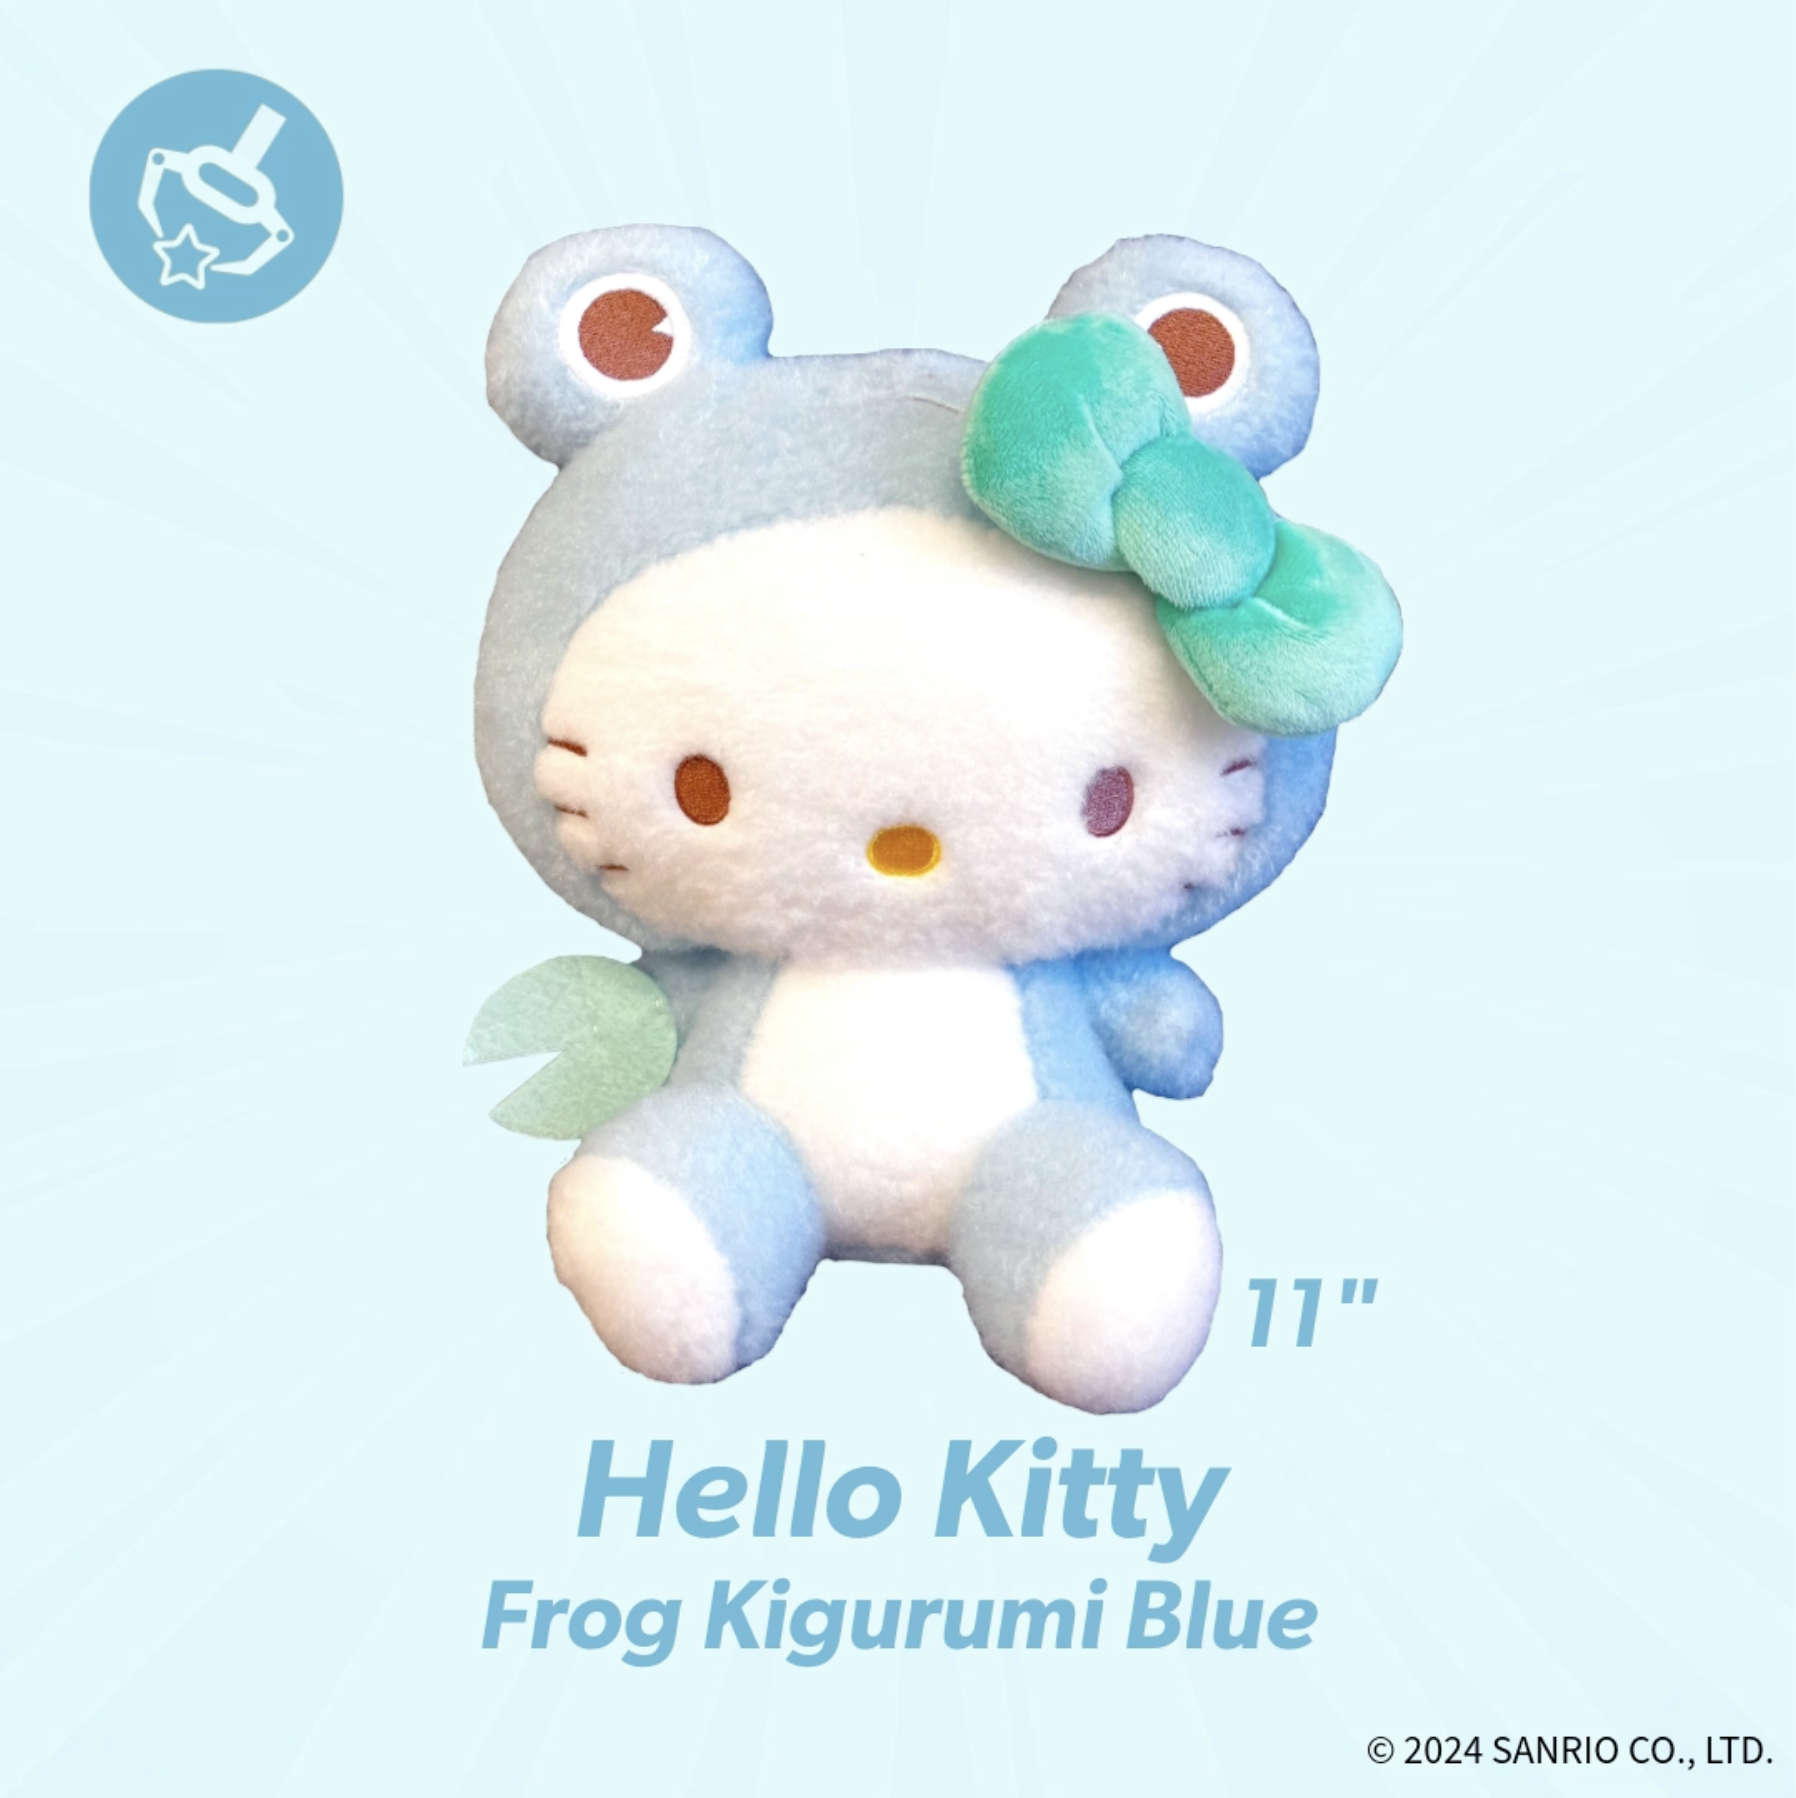 Round1 Arcade Crace Game Sanrio Hello Kitty Frog Kigurumi Blue plushie 11 " 